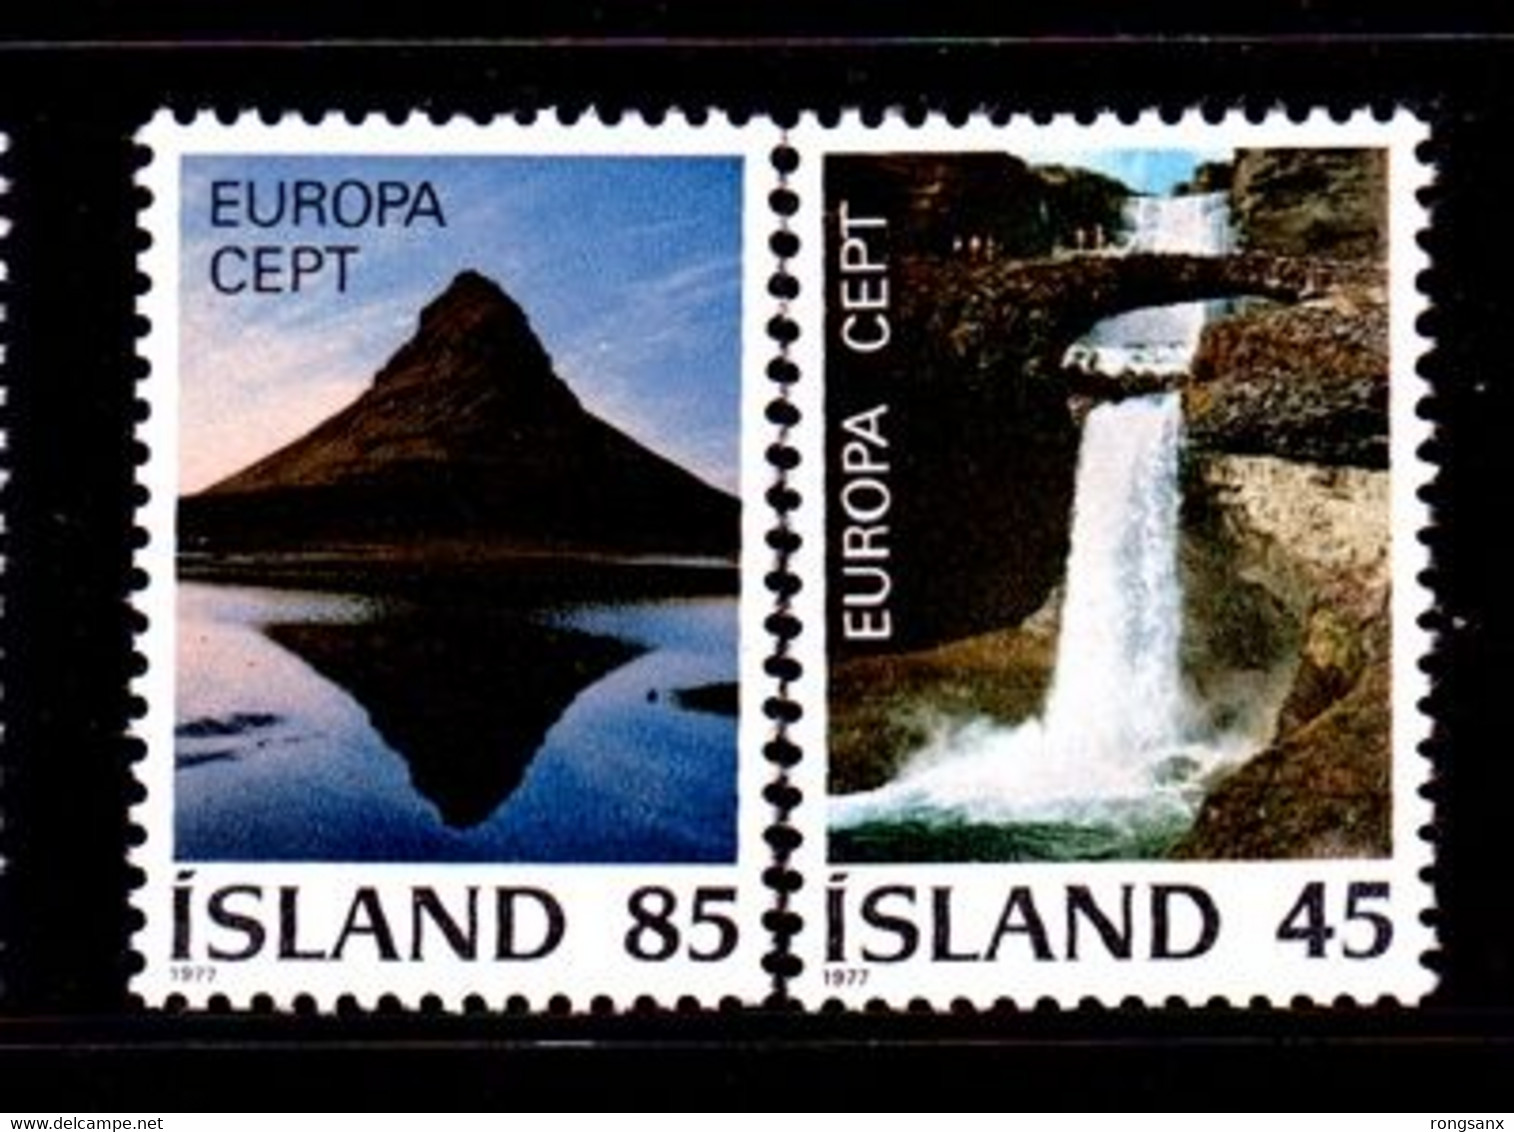 1977 ICELAND EUROPA WATERFALL ISLAND STAMP 2V - Nuovi